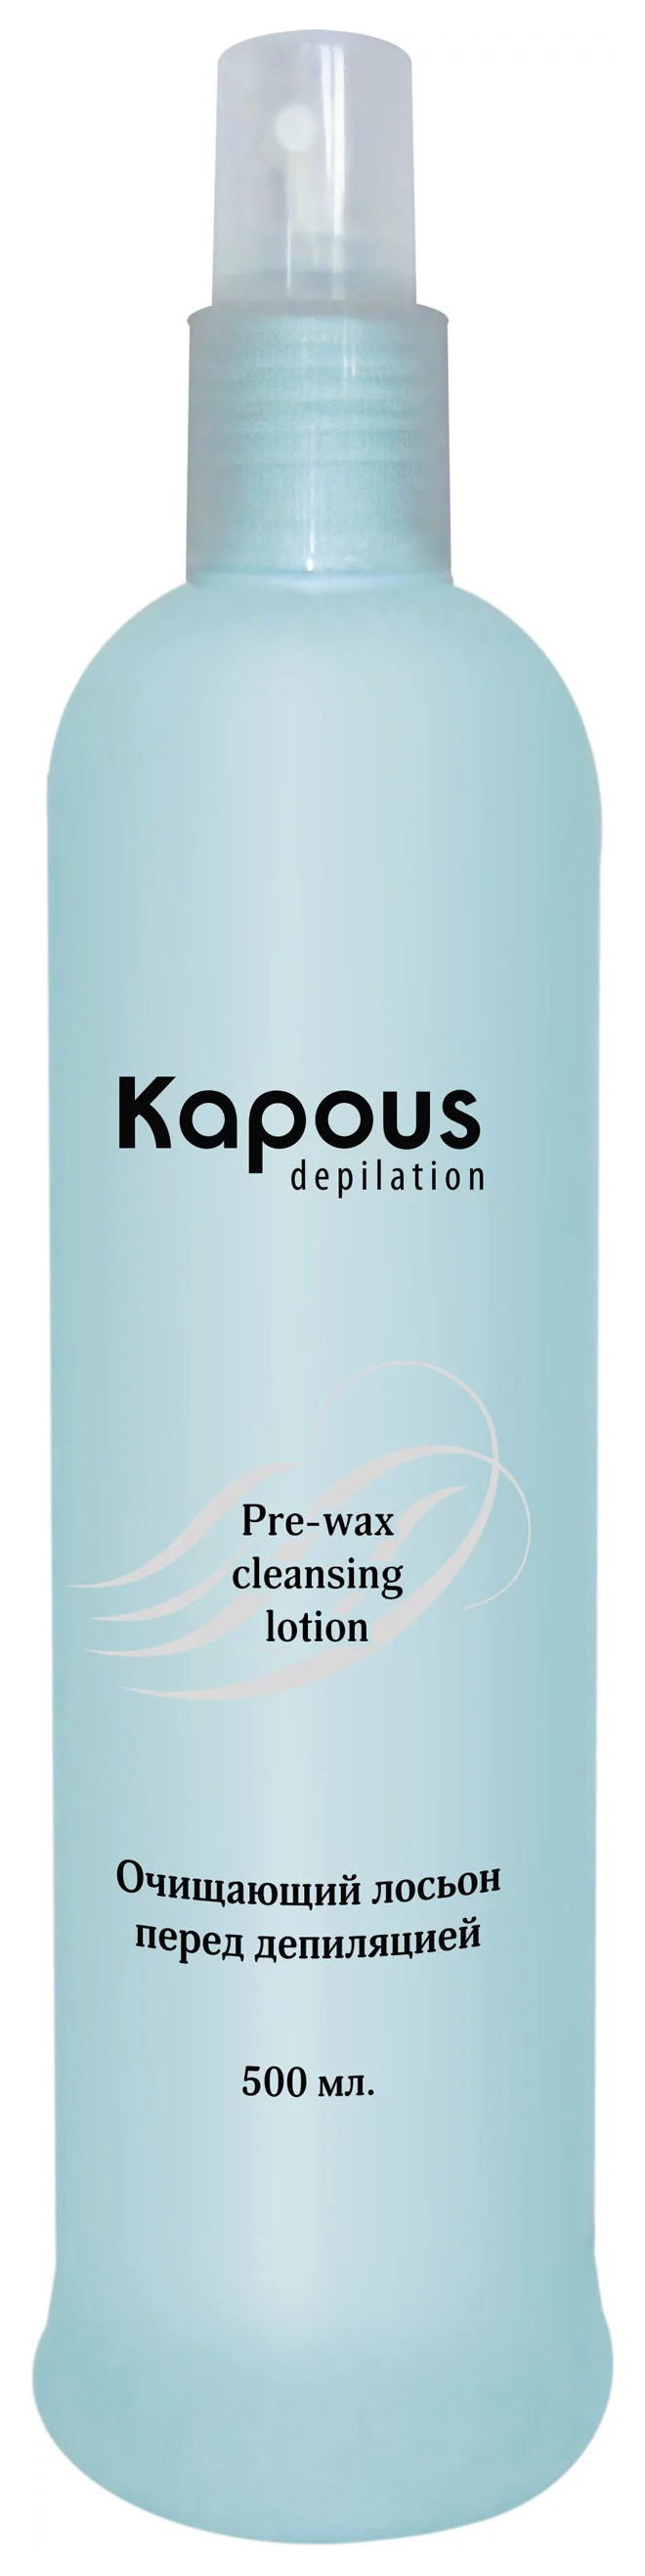 Очищающий лосьон перед депиляцией Kapous Professional 500 мл средство для демакияжа перед депиляцией сerazyme 1204895 500 мл